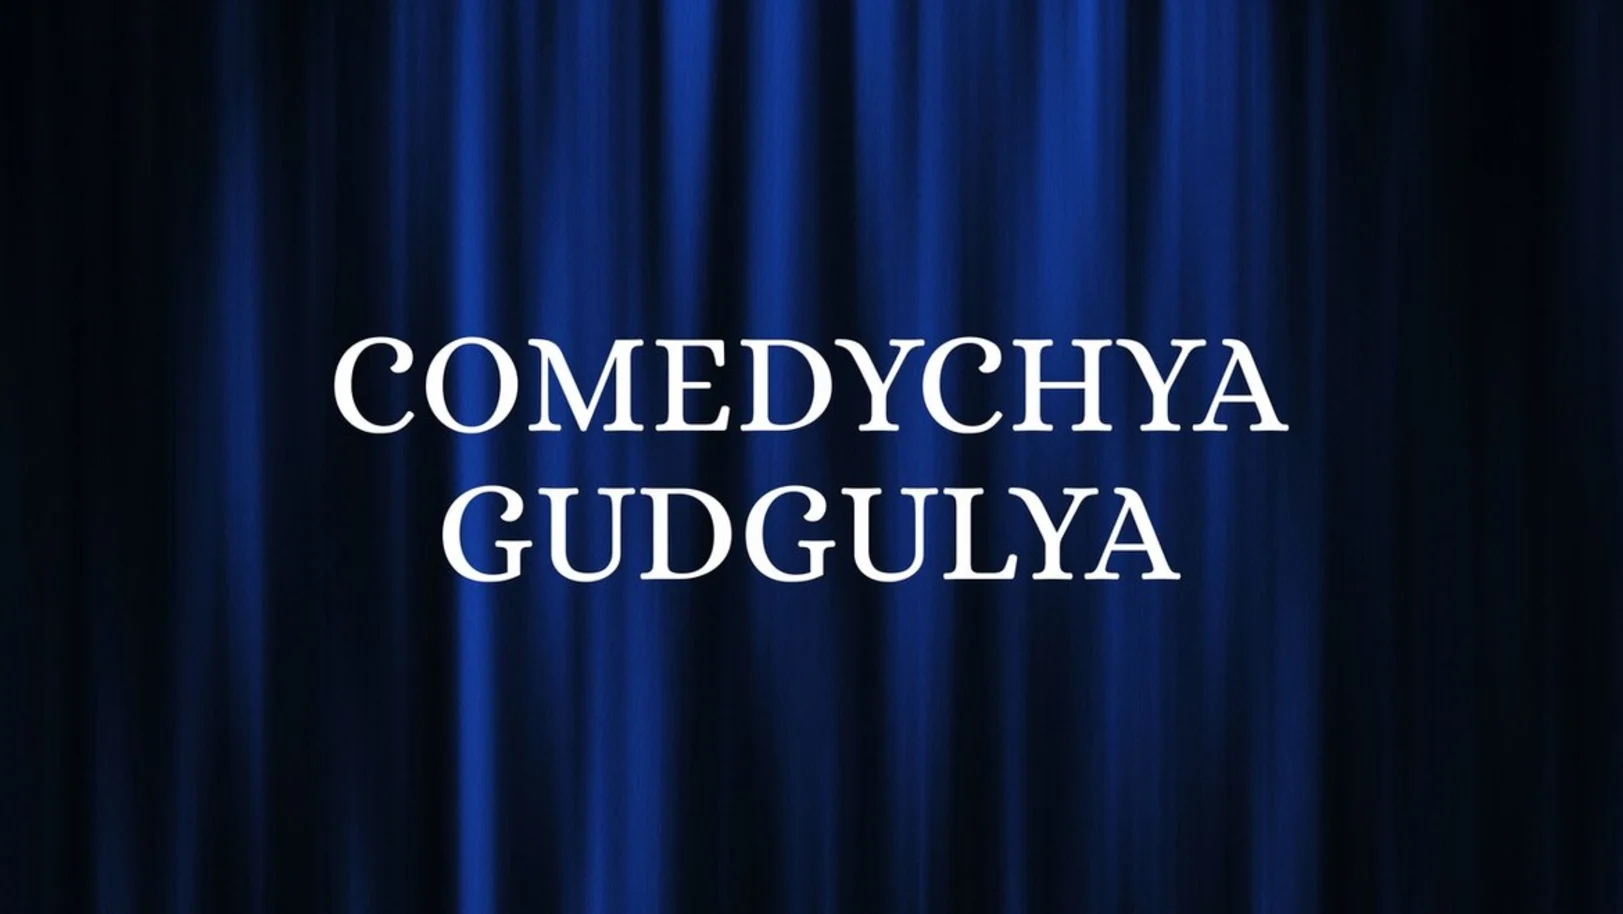 Comedychya Gudgulya Streaming Now On Zee Talkies